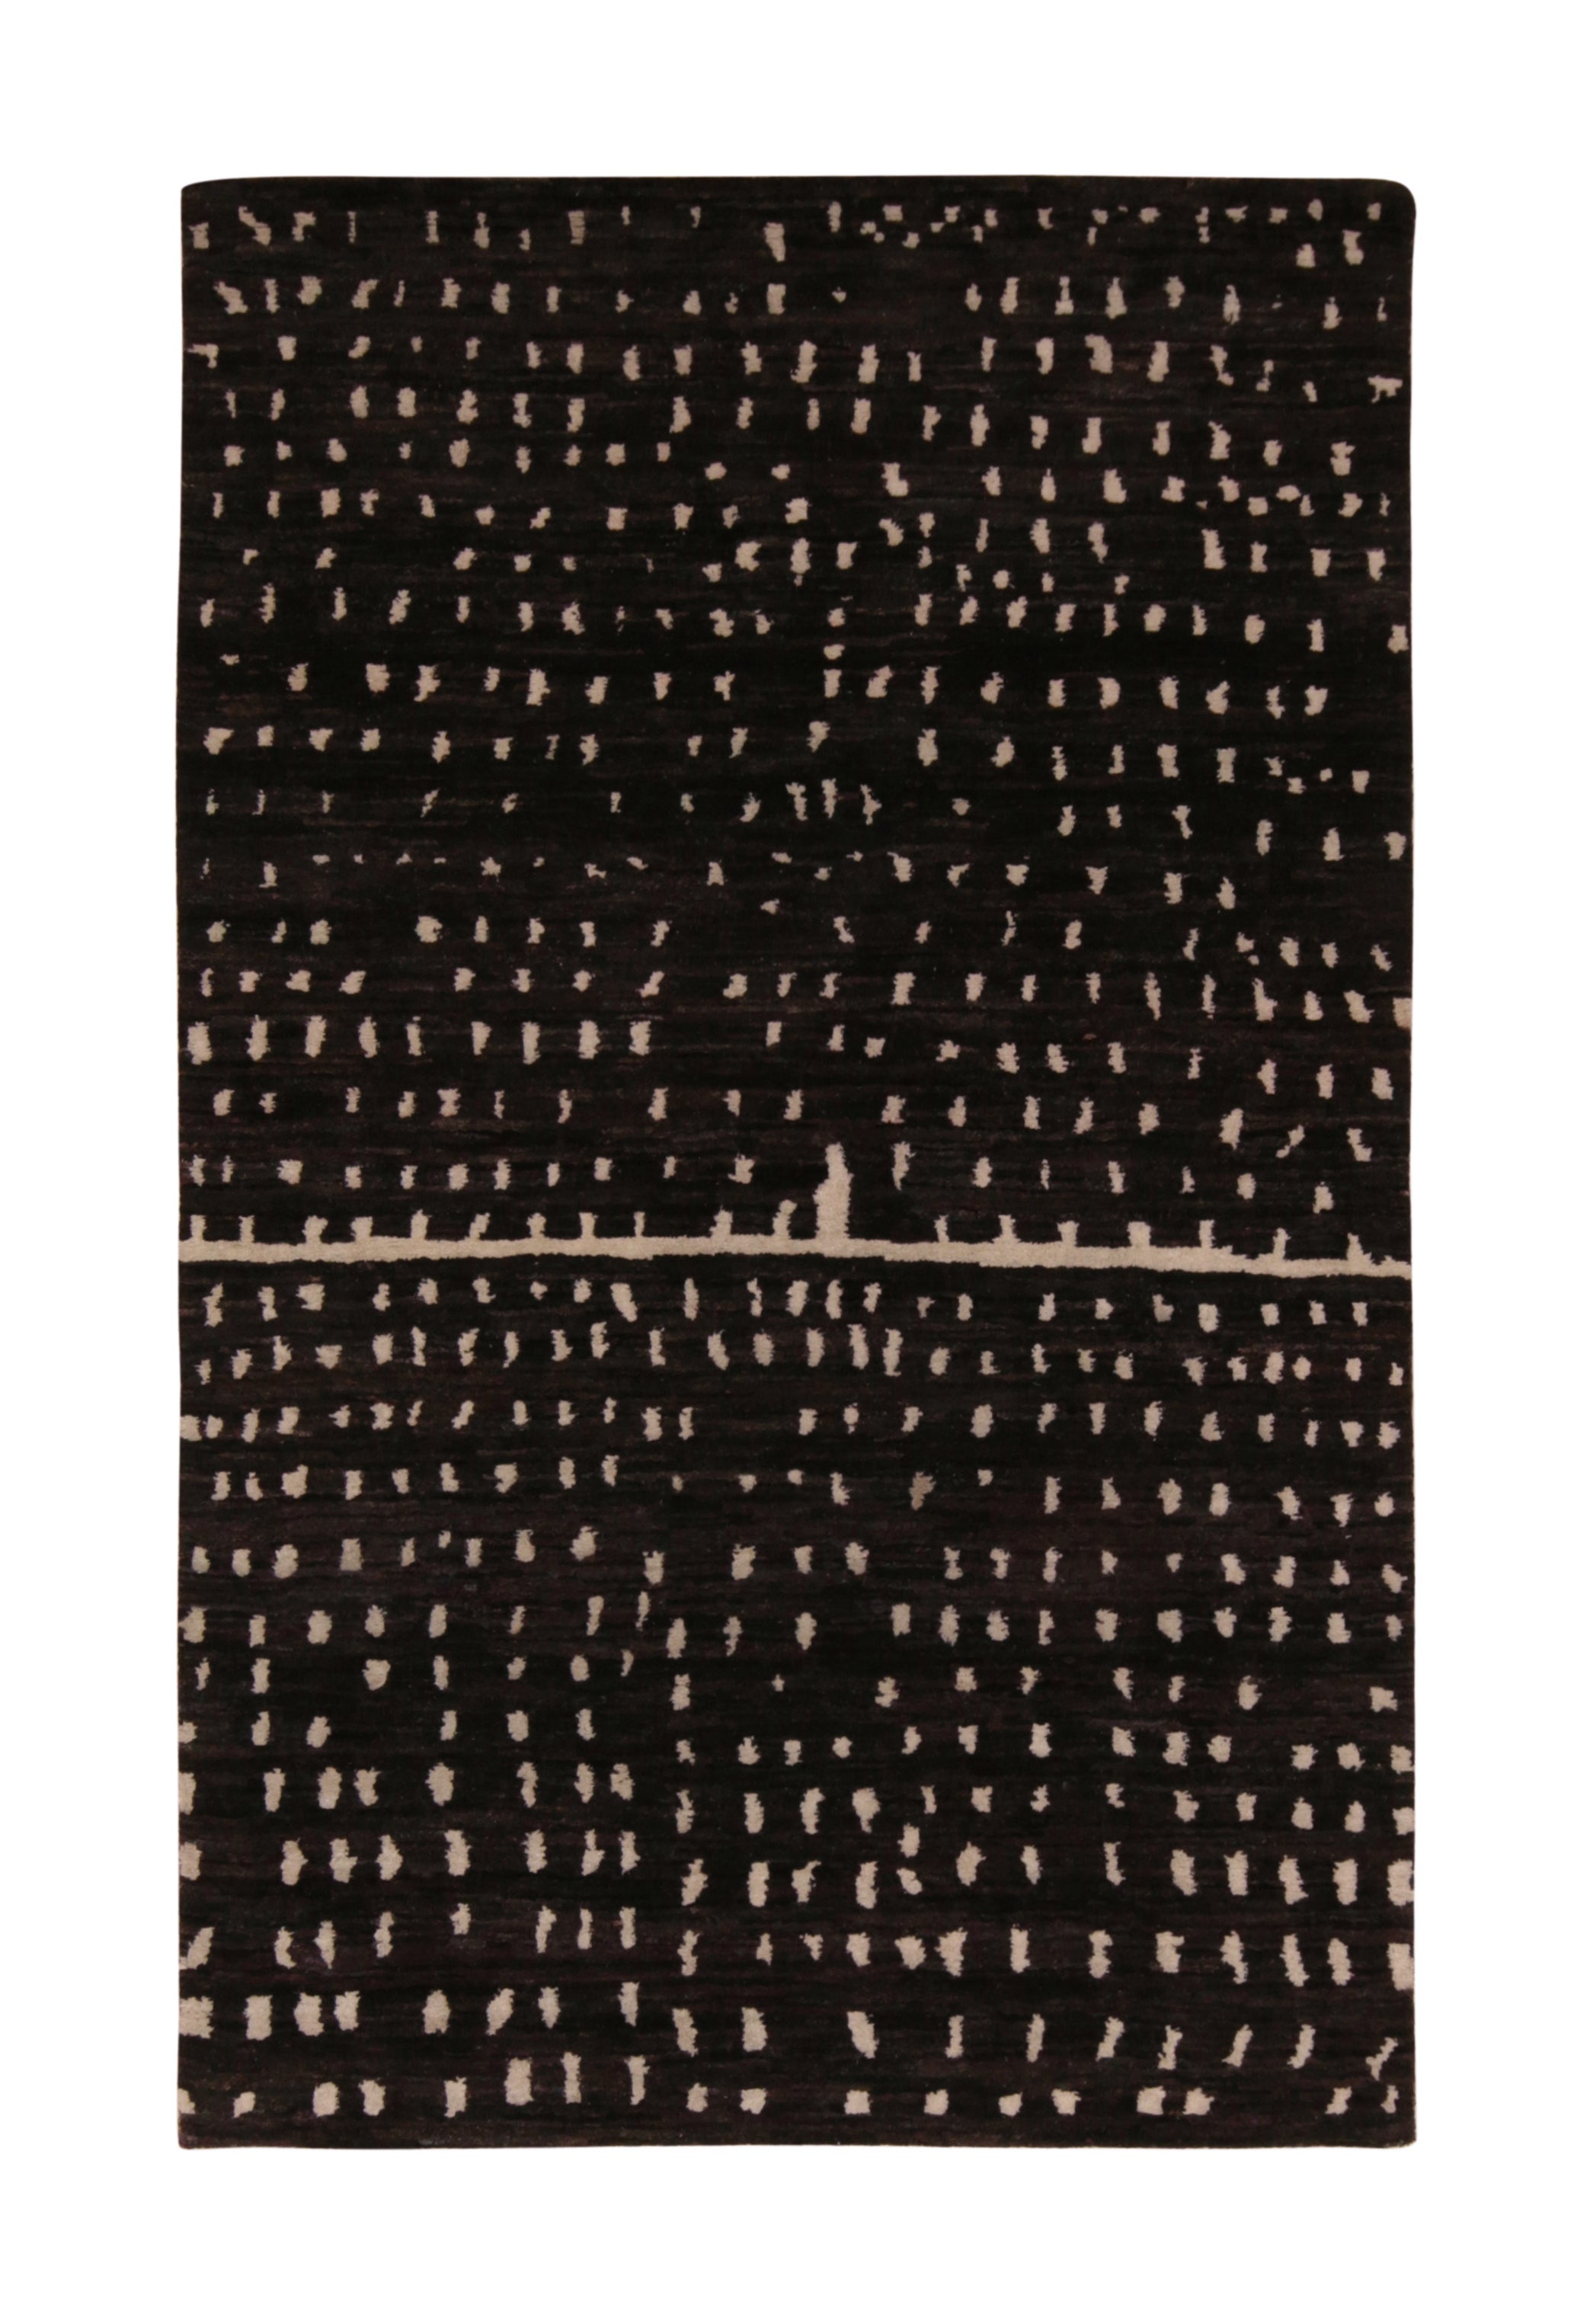 Rug & Kilim’s Modern Rug in Black & White Dots Pattern For Sale